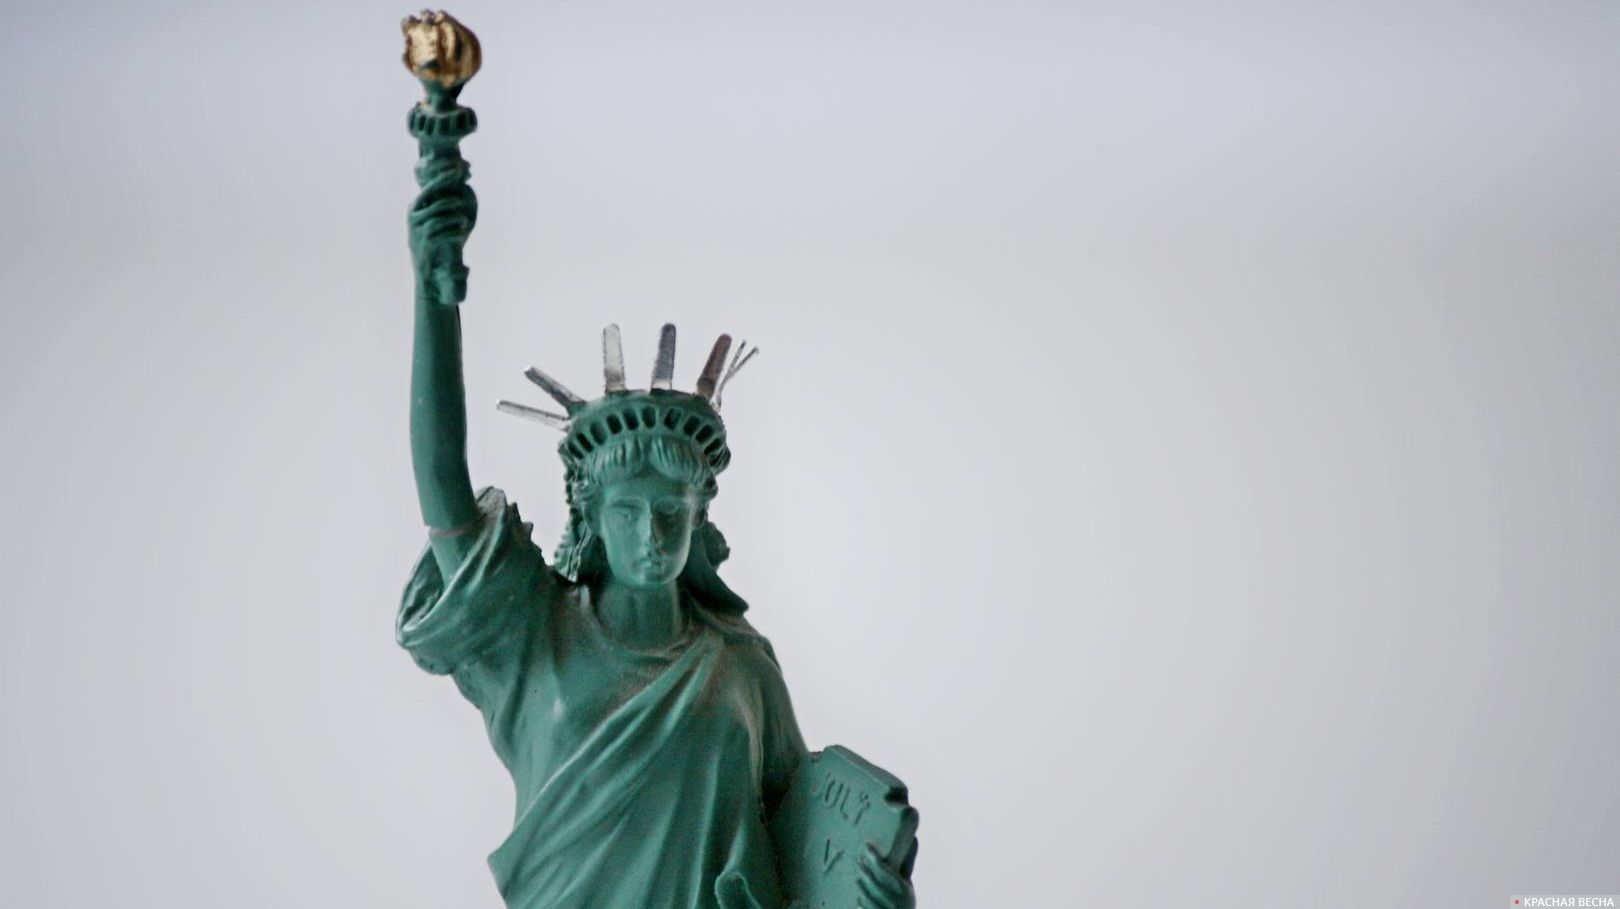 Фигурка Статуи Свободы